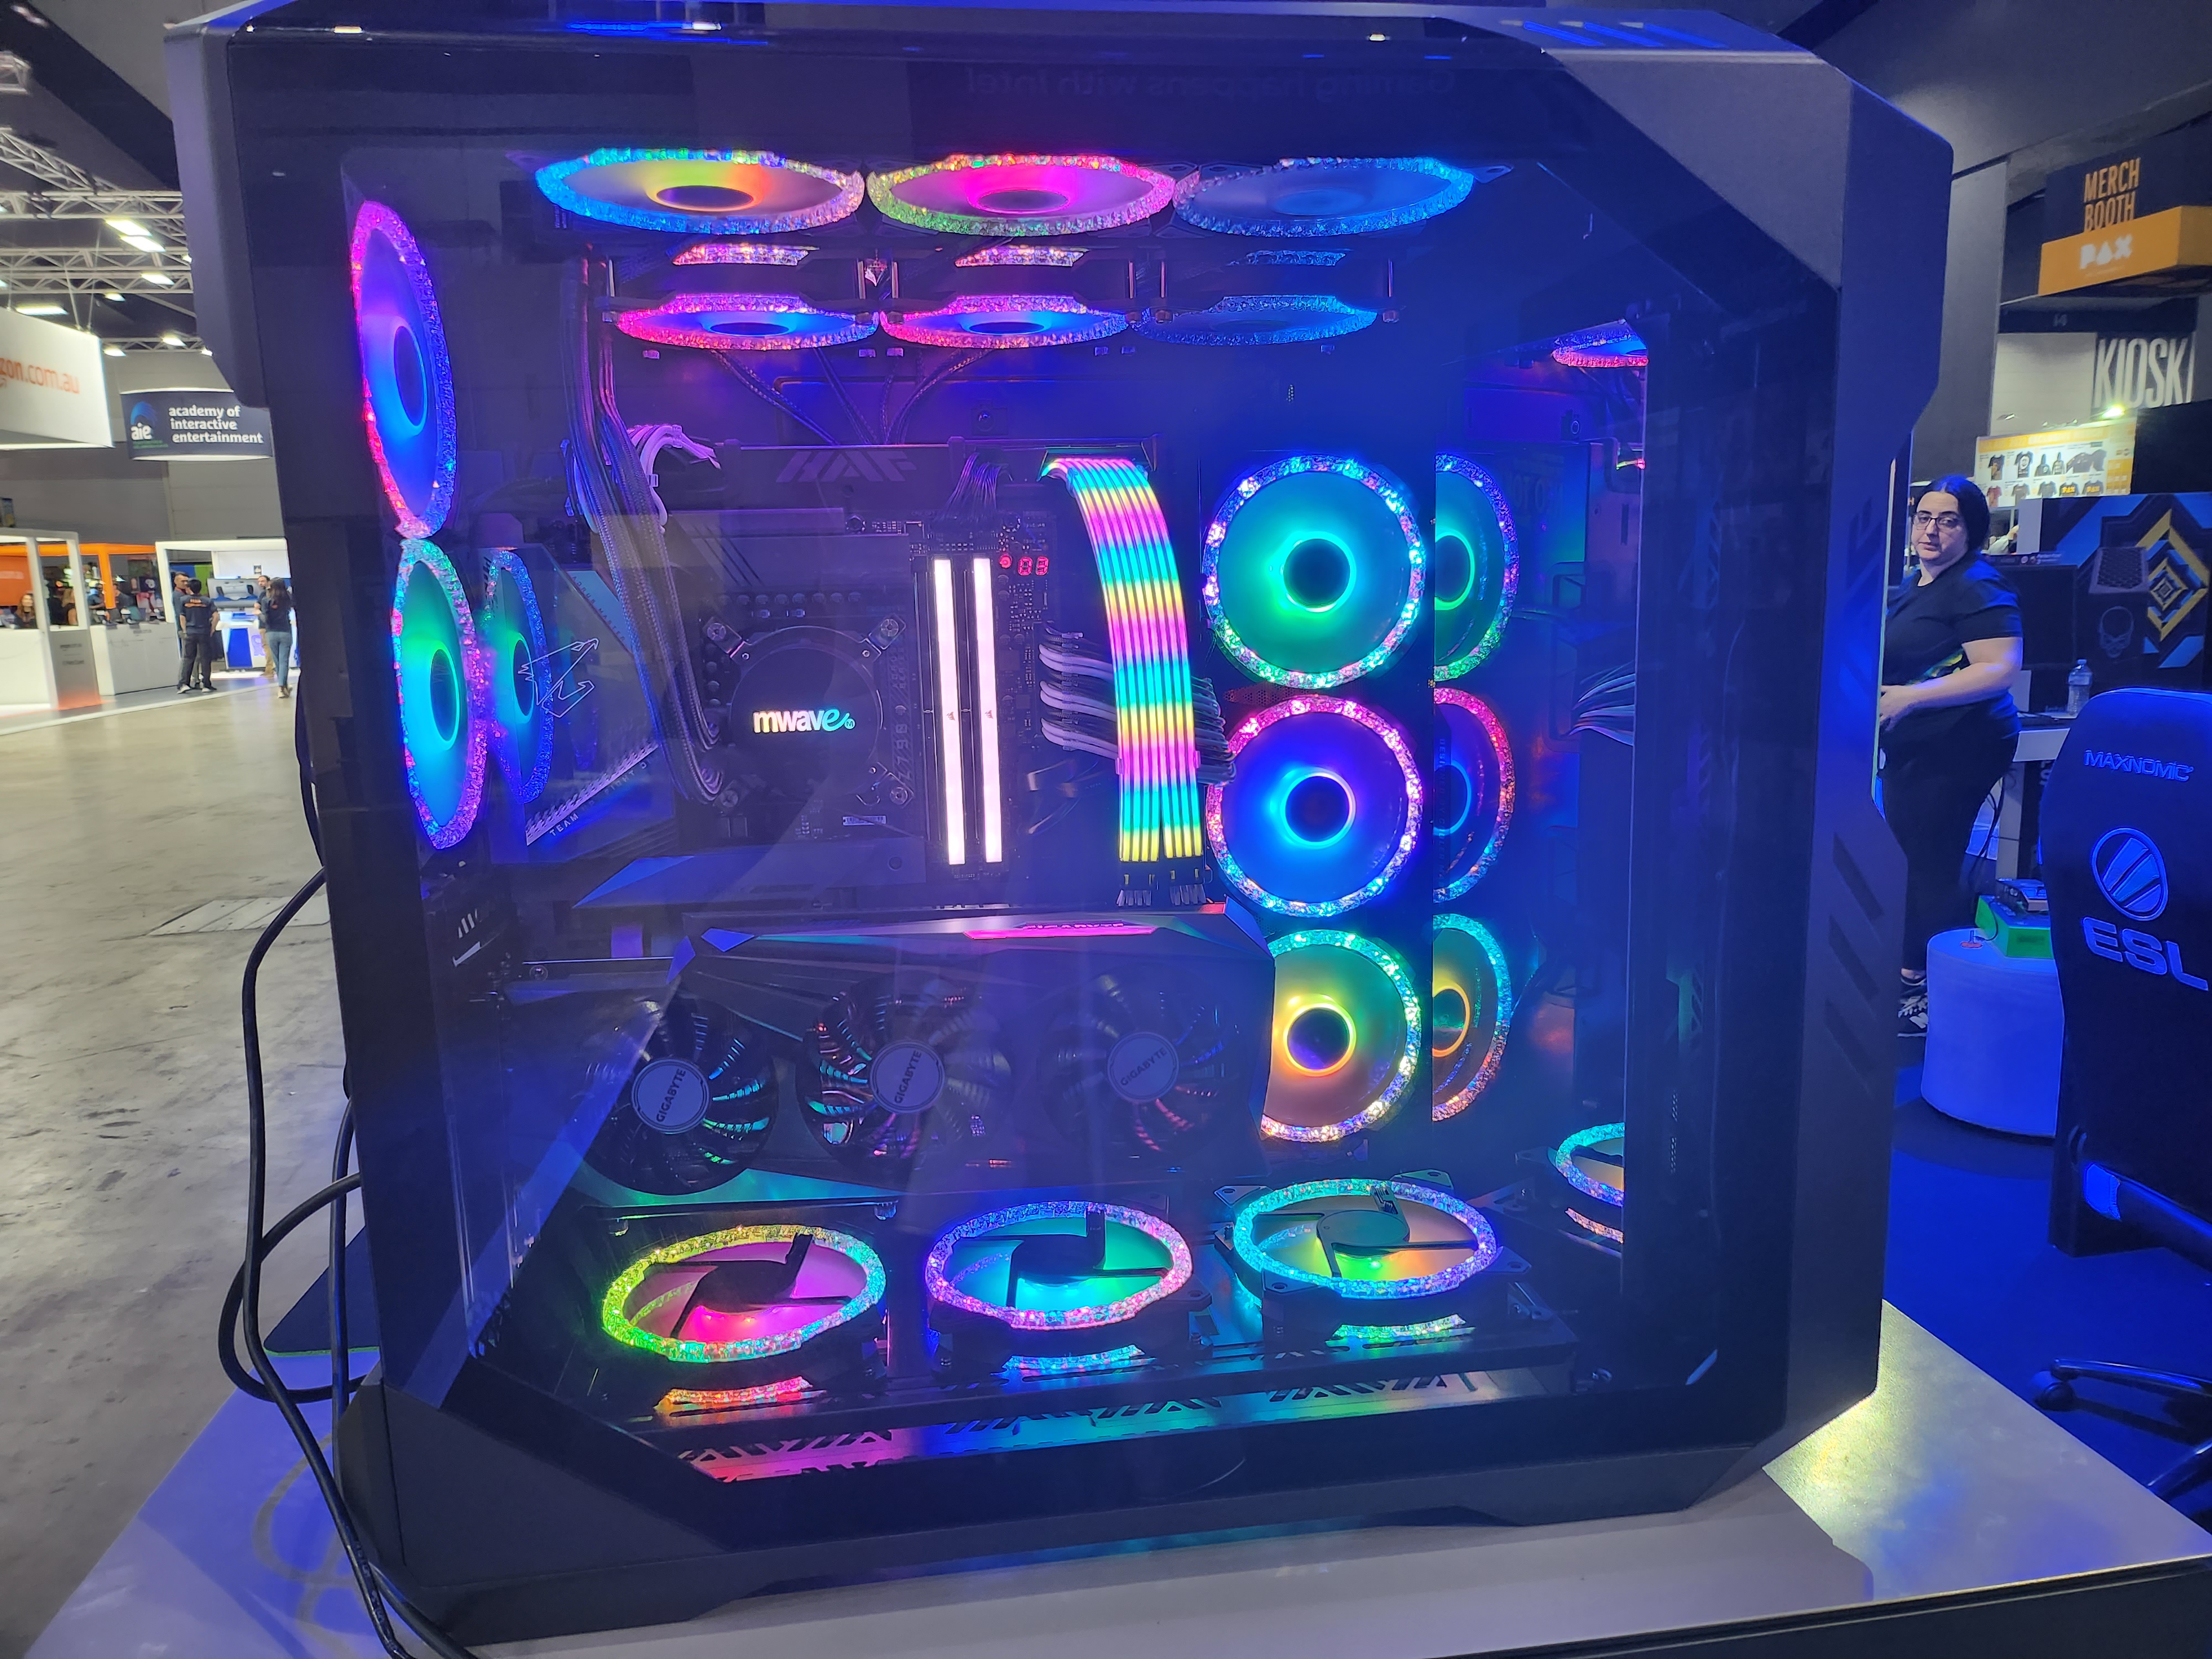 Rainbow PC builds